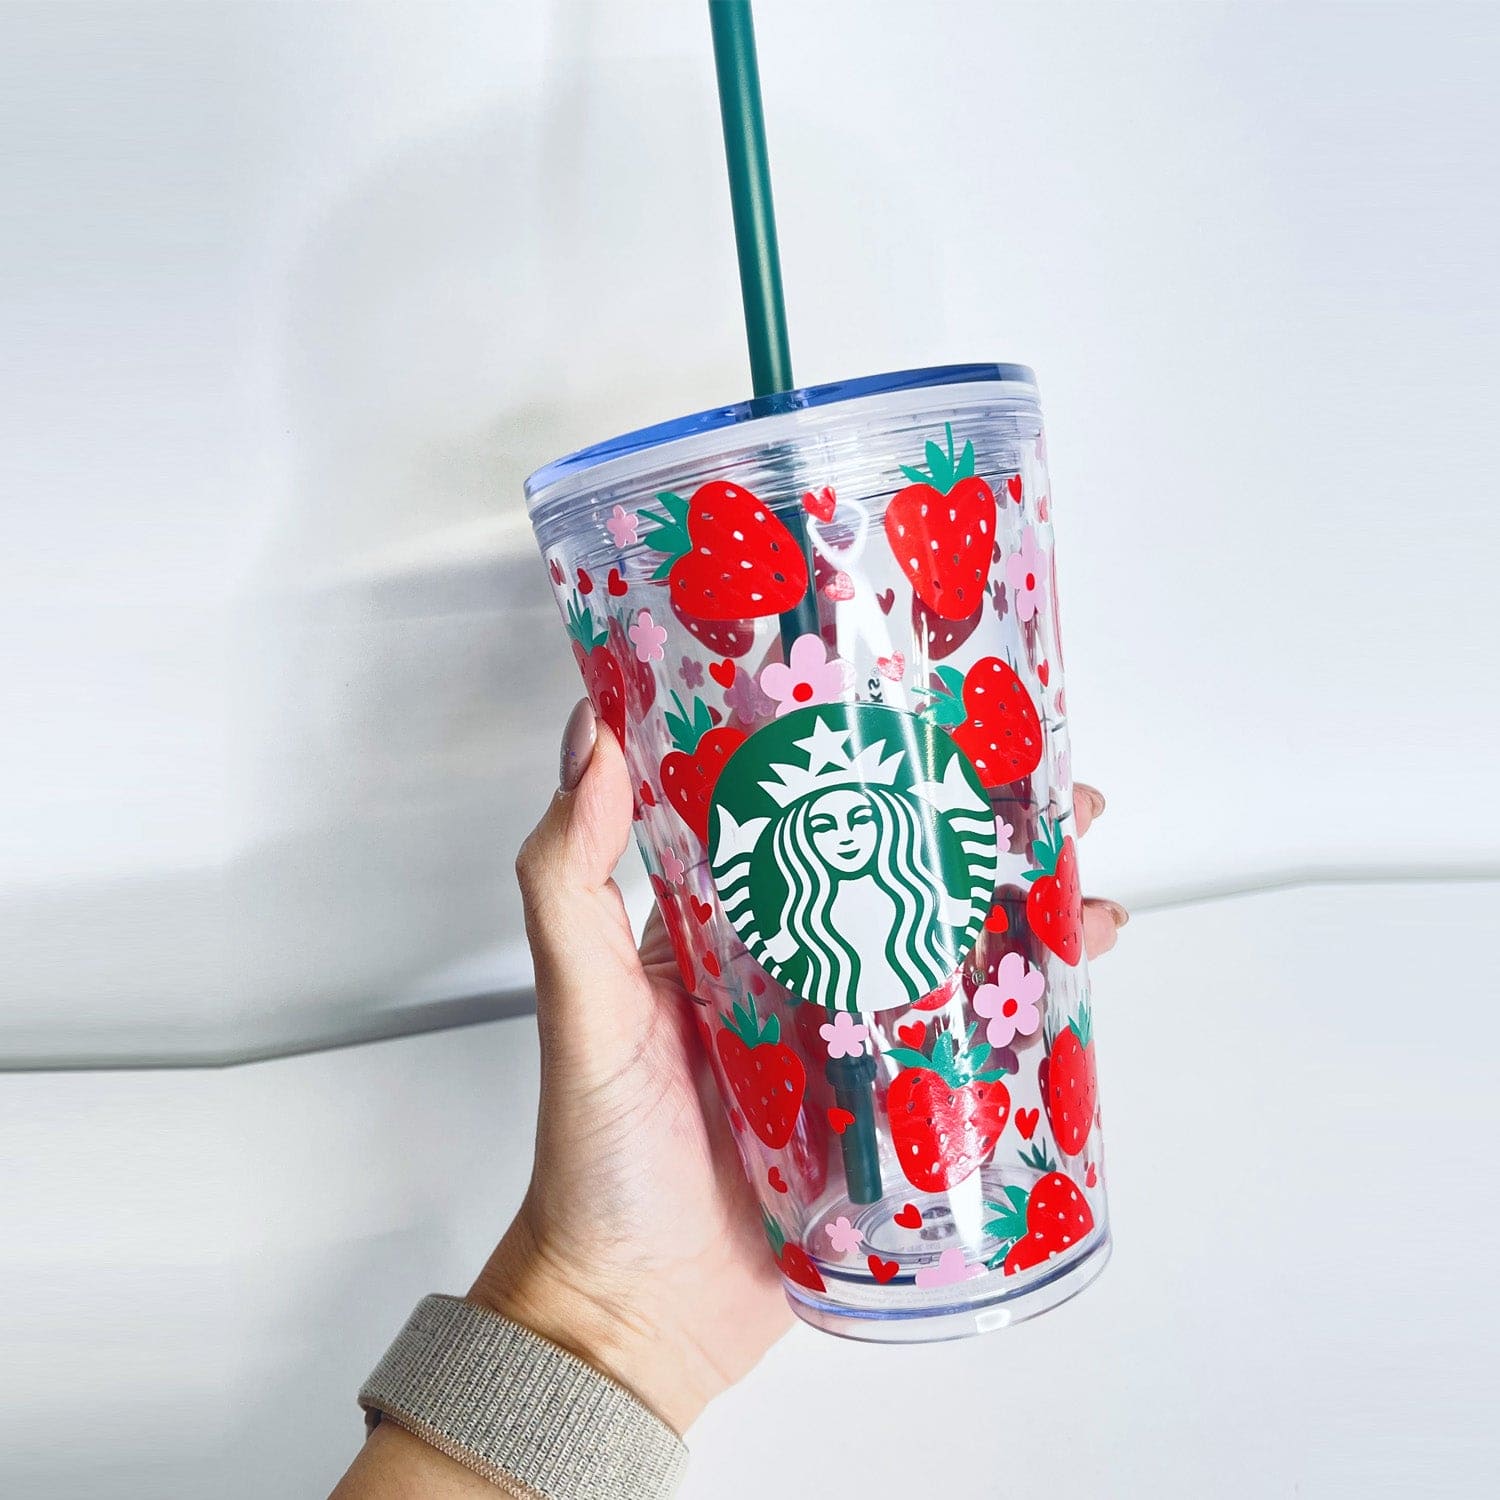 Glitter Liquid Customized Snow Globe Starbucks Tumbler Cup 